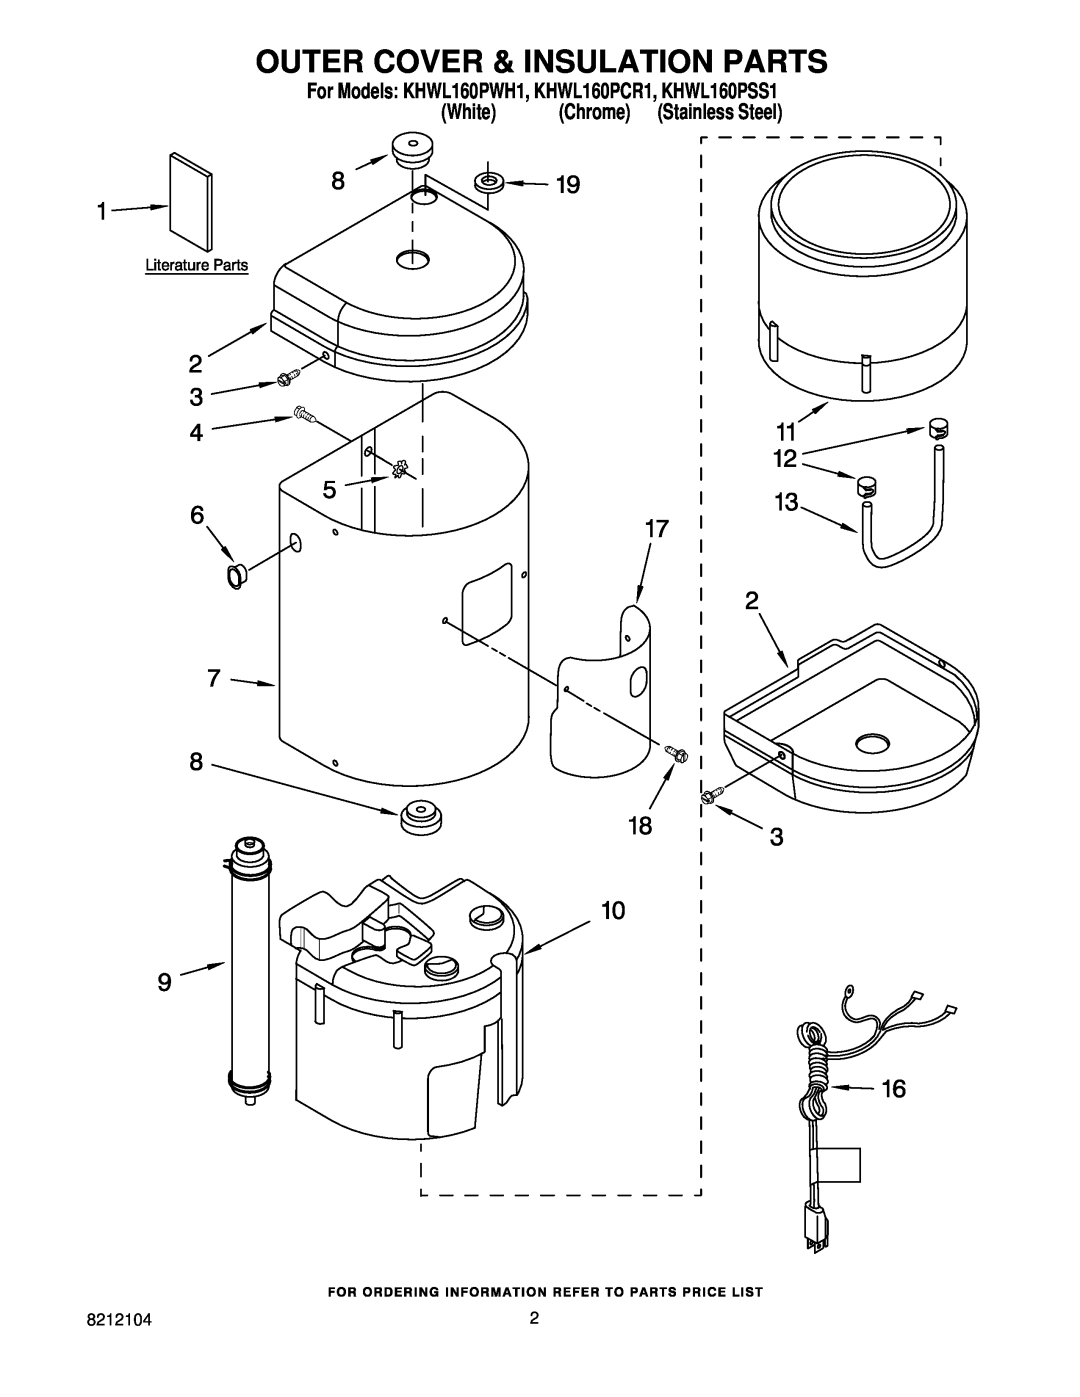 KitchenAid manual Outer Cover & Insulation Parts, For Models KHWL160PWH1, KHWL160PCR1, KHWL160PSS1, White, Chrome 